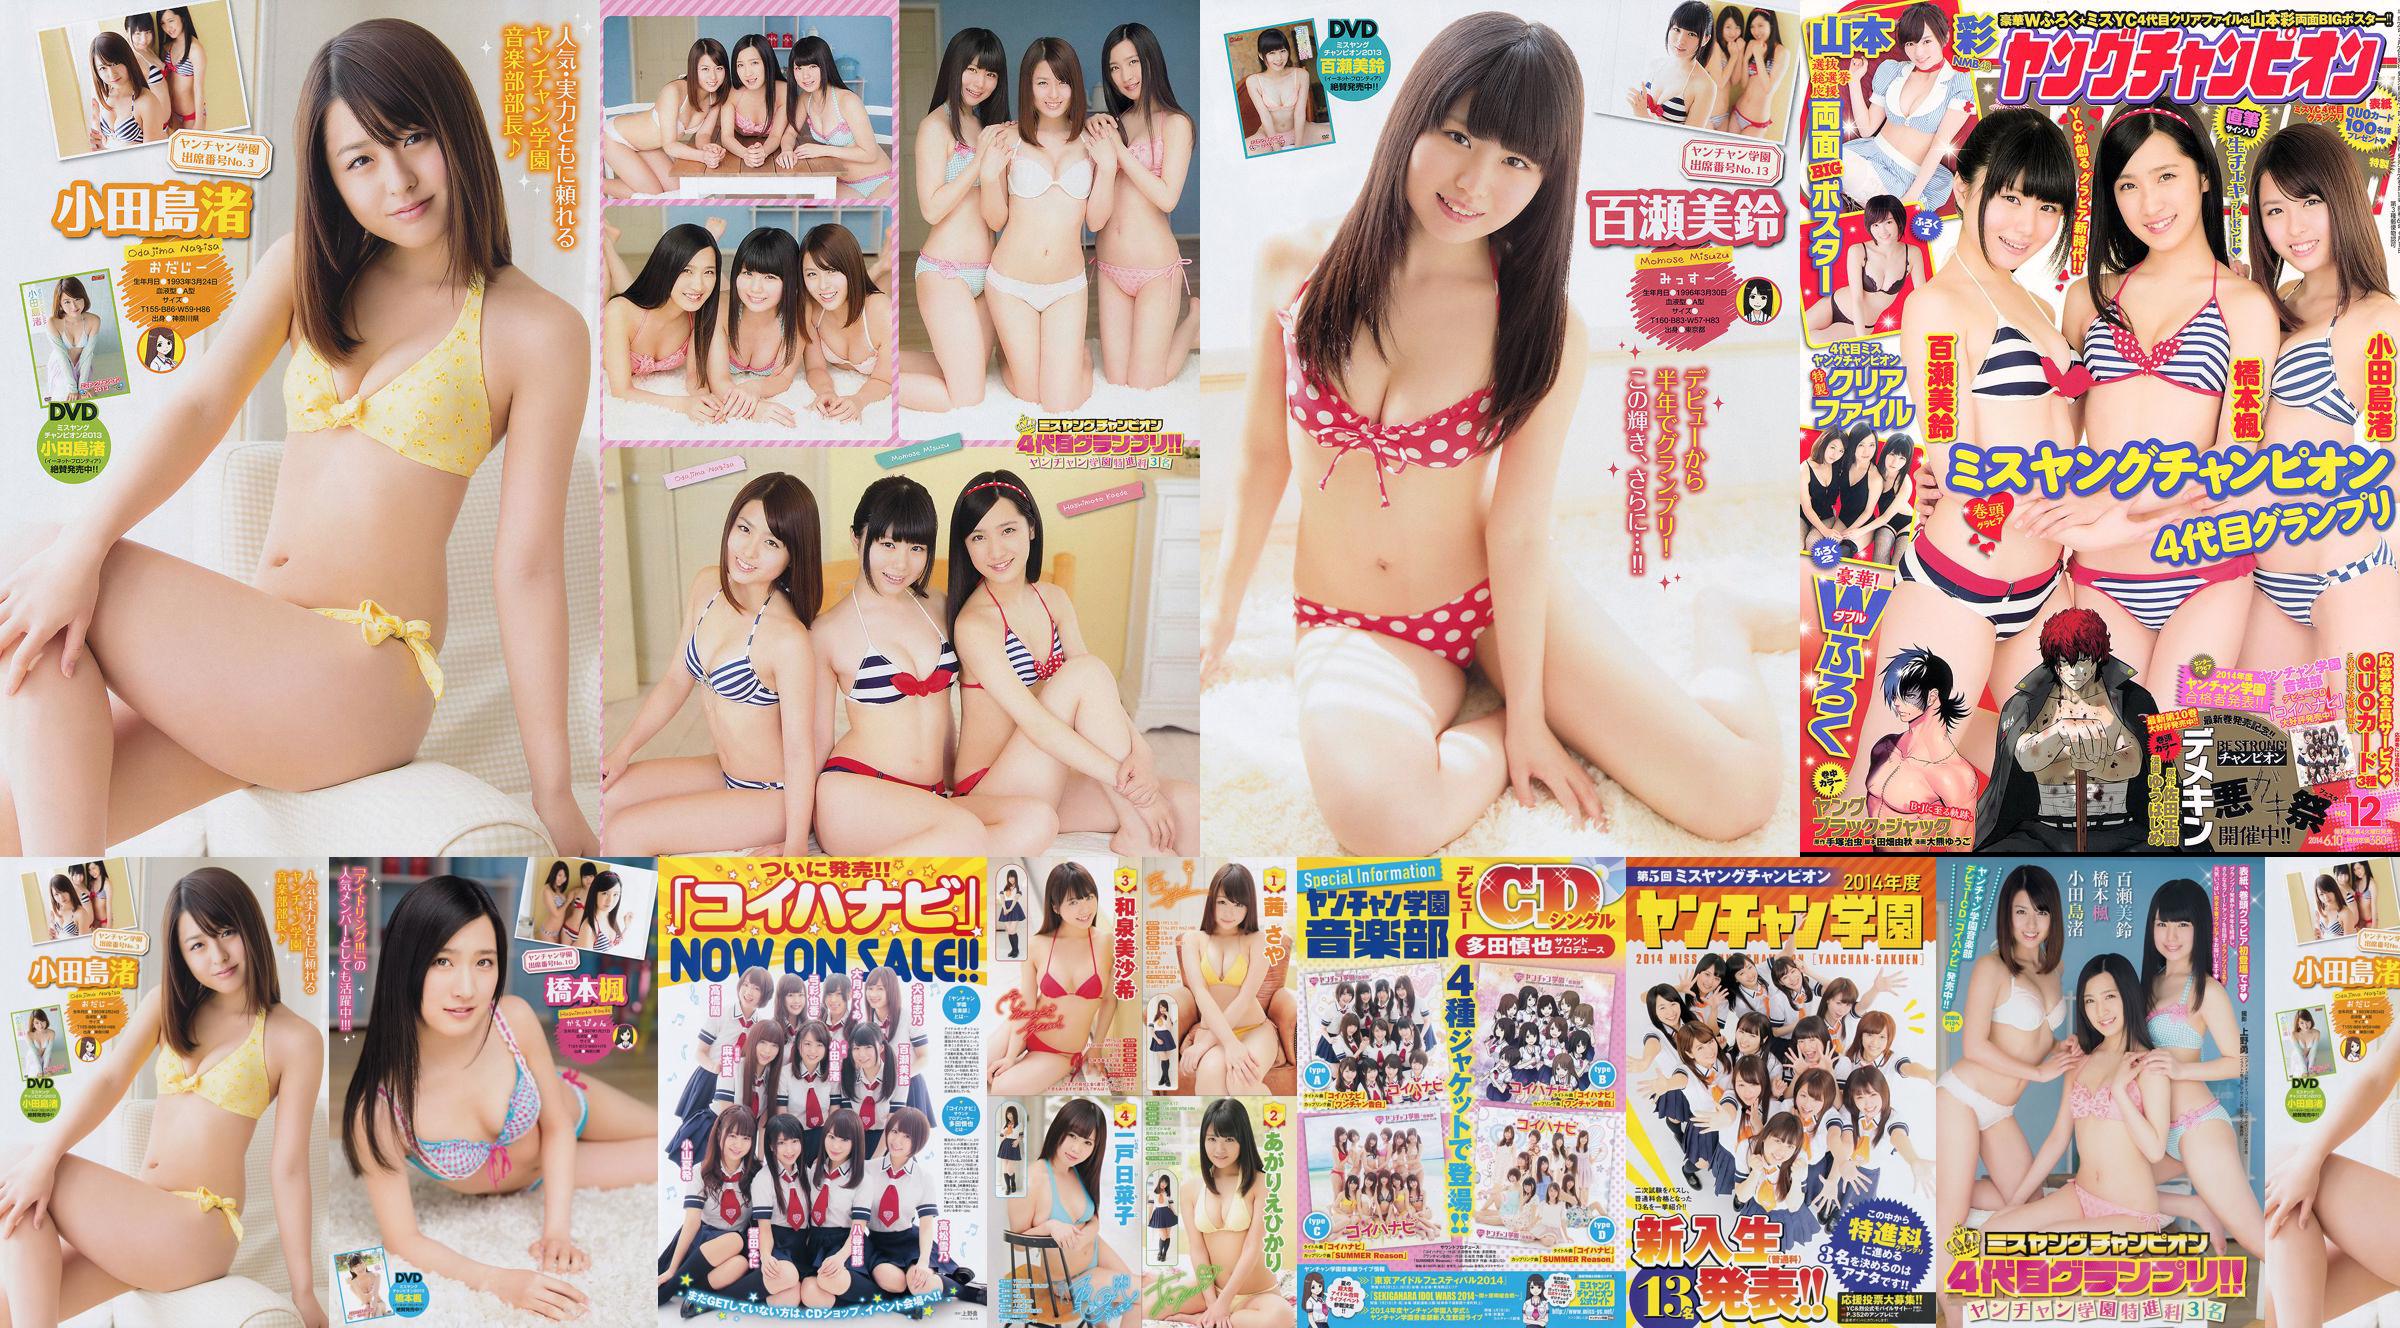 [Jeune Champion] Nagisa Odajima Kaede Hashimoto Misuzu Momose 2014 Photographie n ° 12 No.67513c Page 1